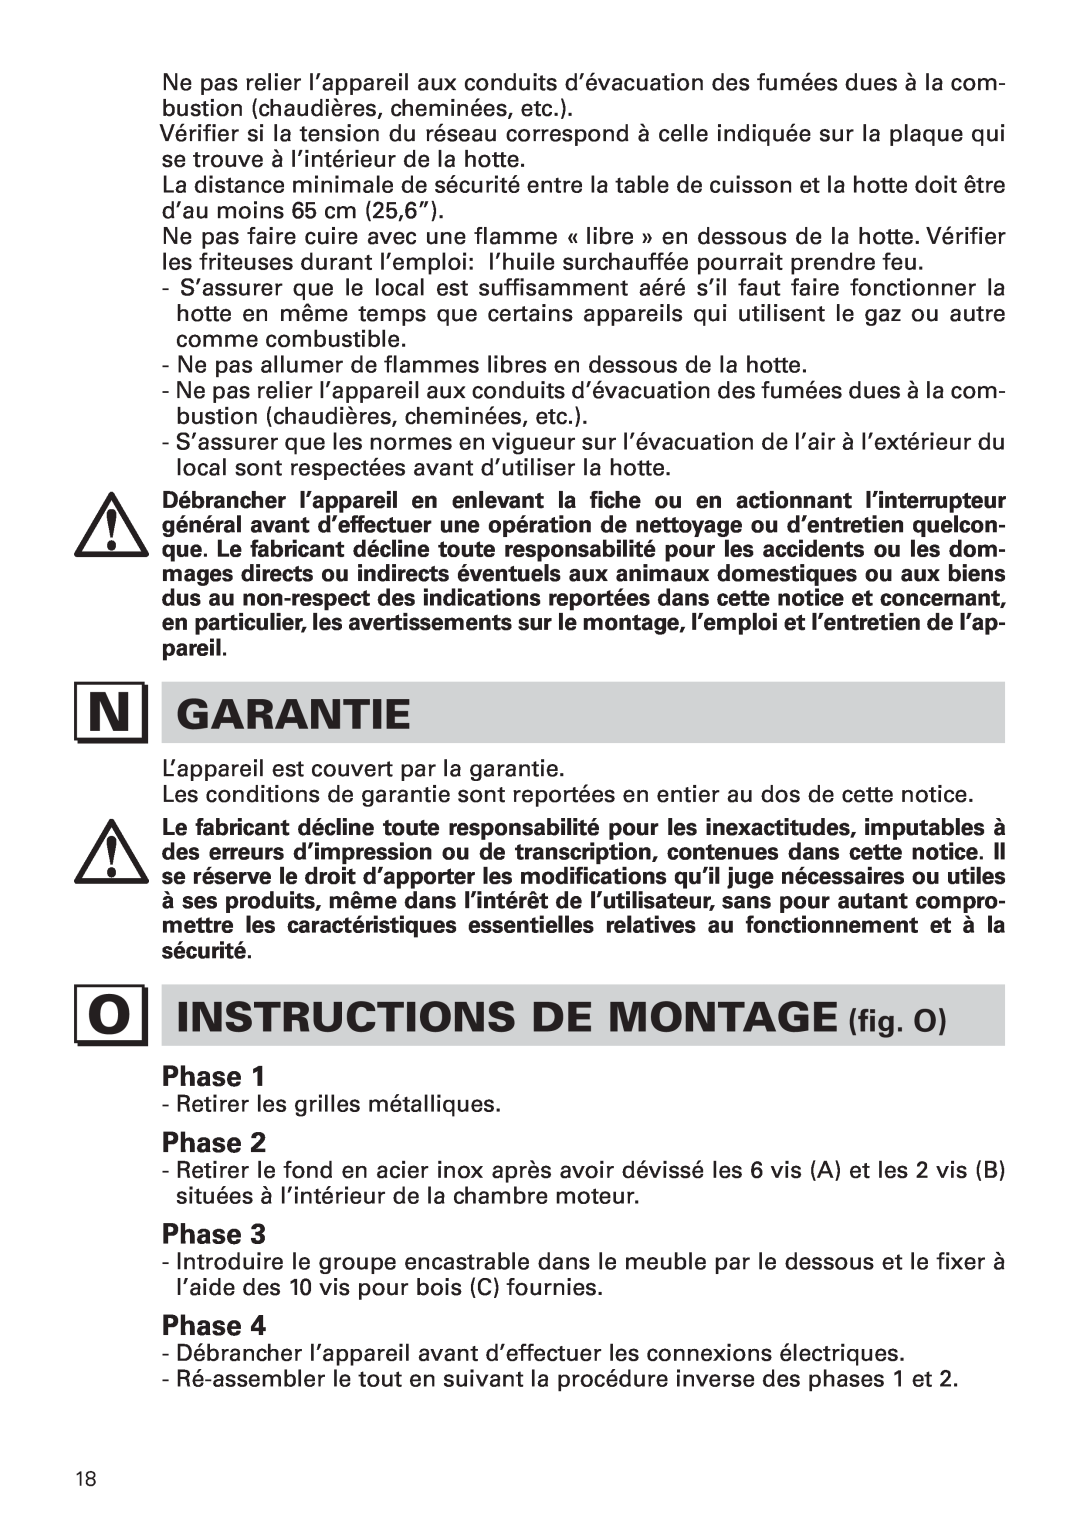 Bertazzoni KIN 36 PRO X manual Garantie, INSTRUCTIONS DE MONTAGE fig. O, Phase 